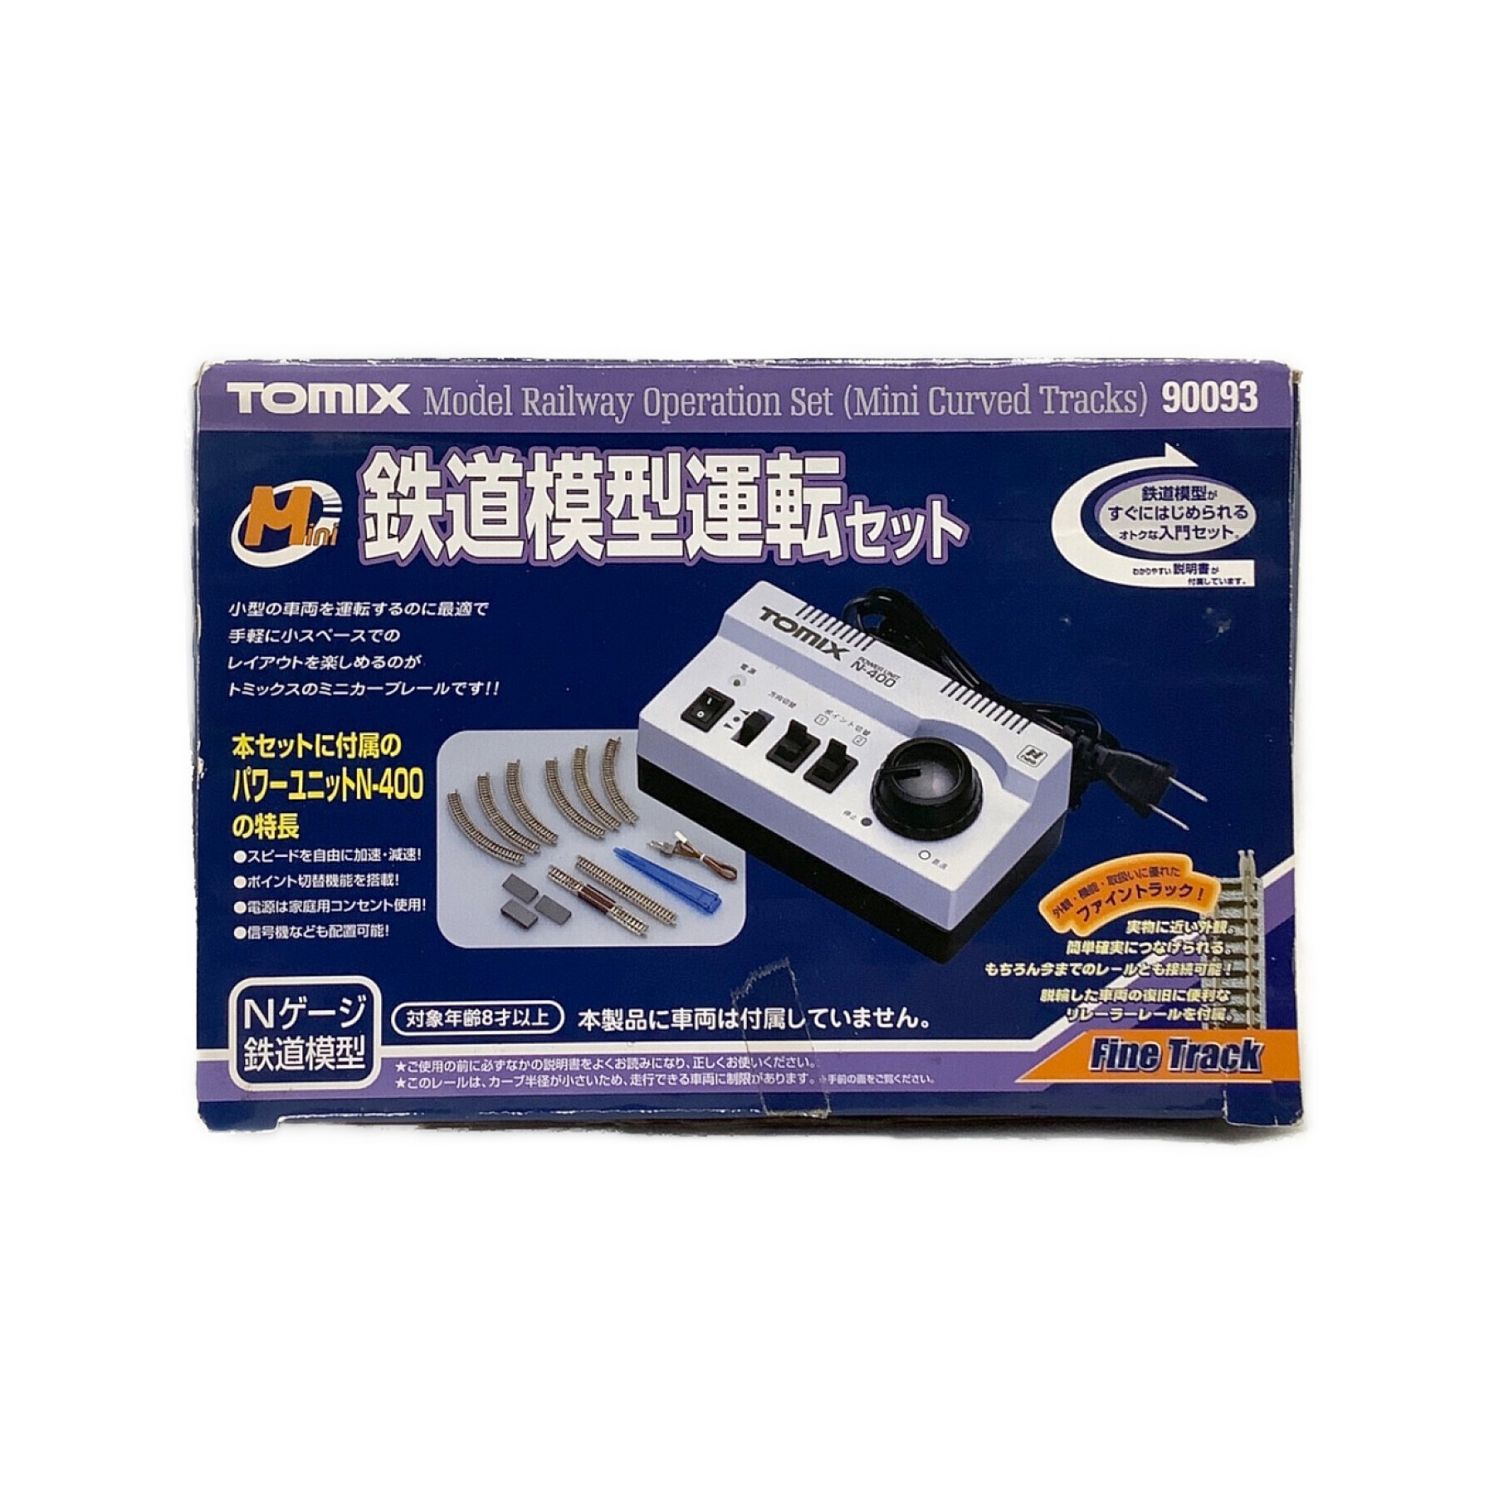 TOMIX (トミックス) Nゲージ ミニ 鉄道模型運転セット 通電確認 90093 